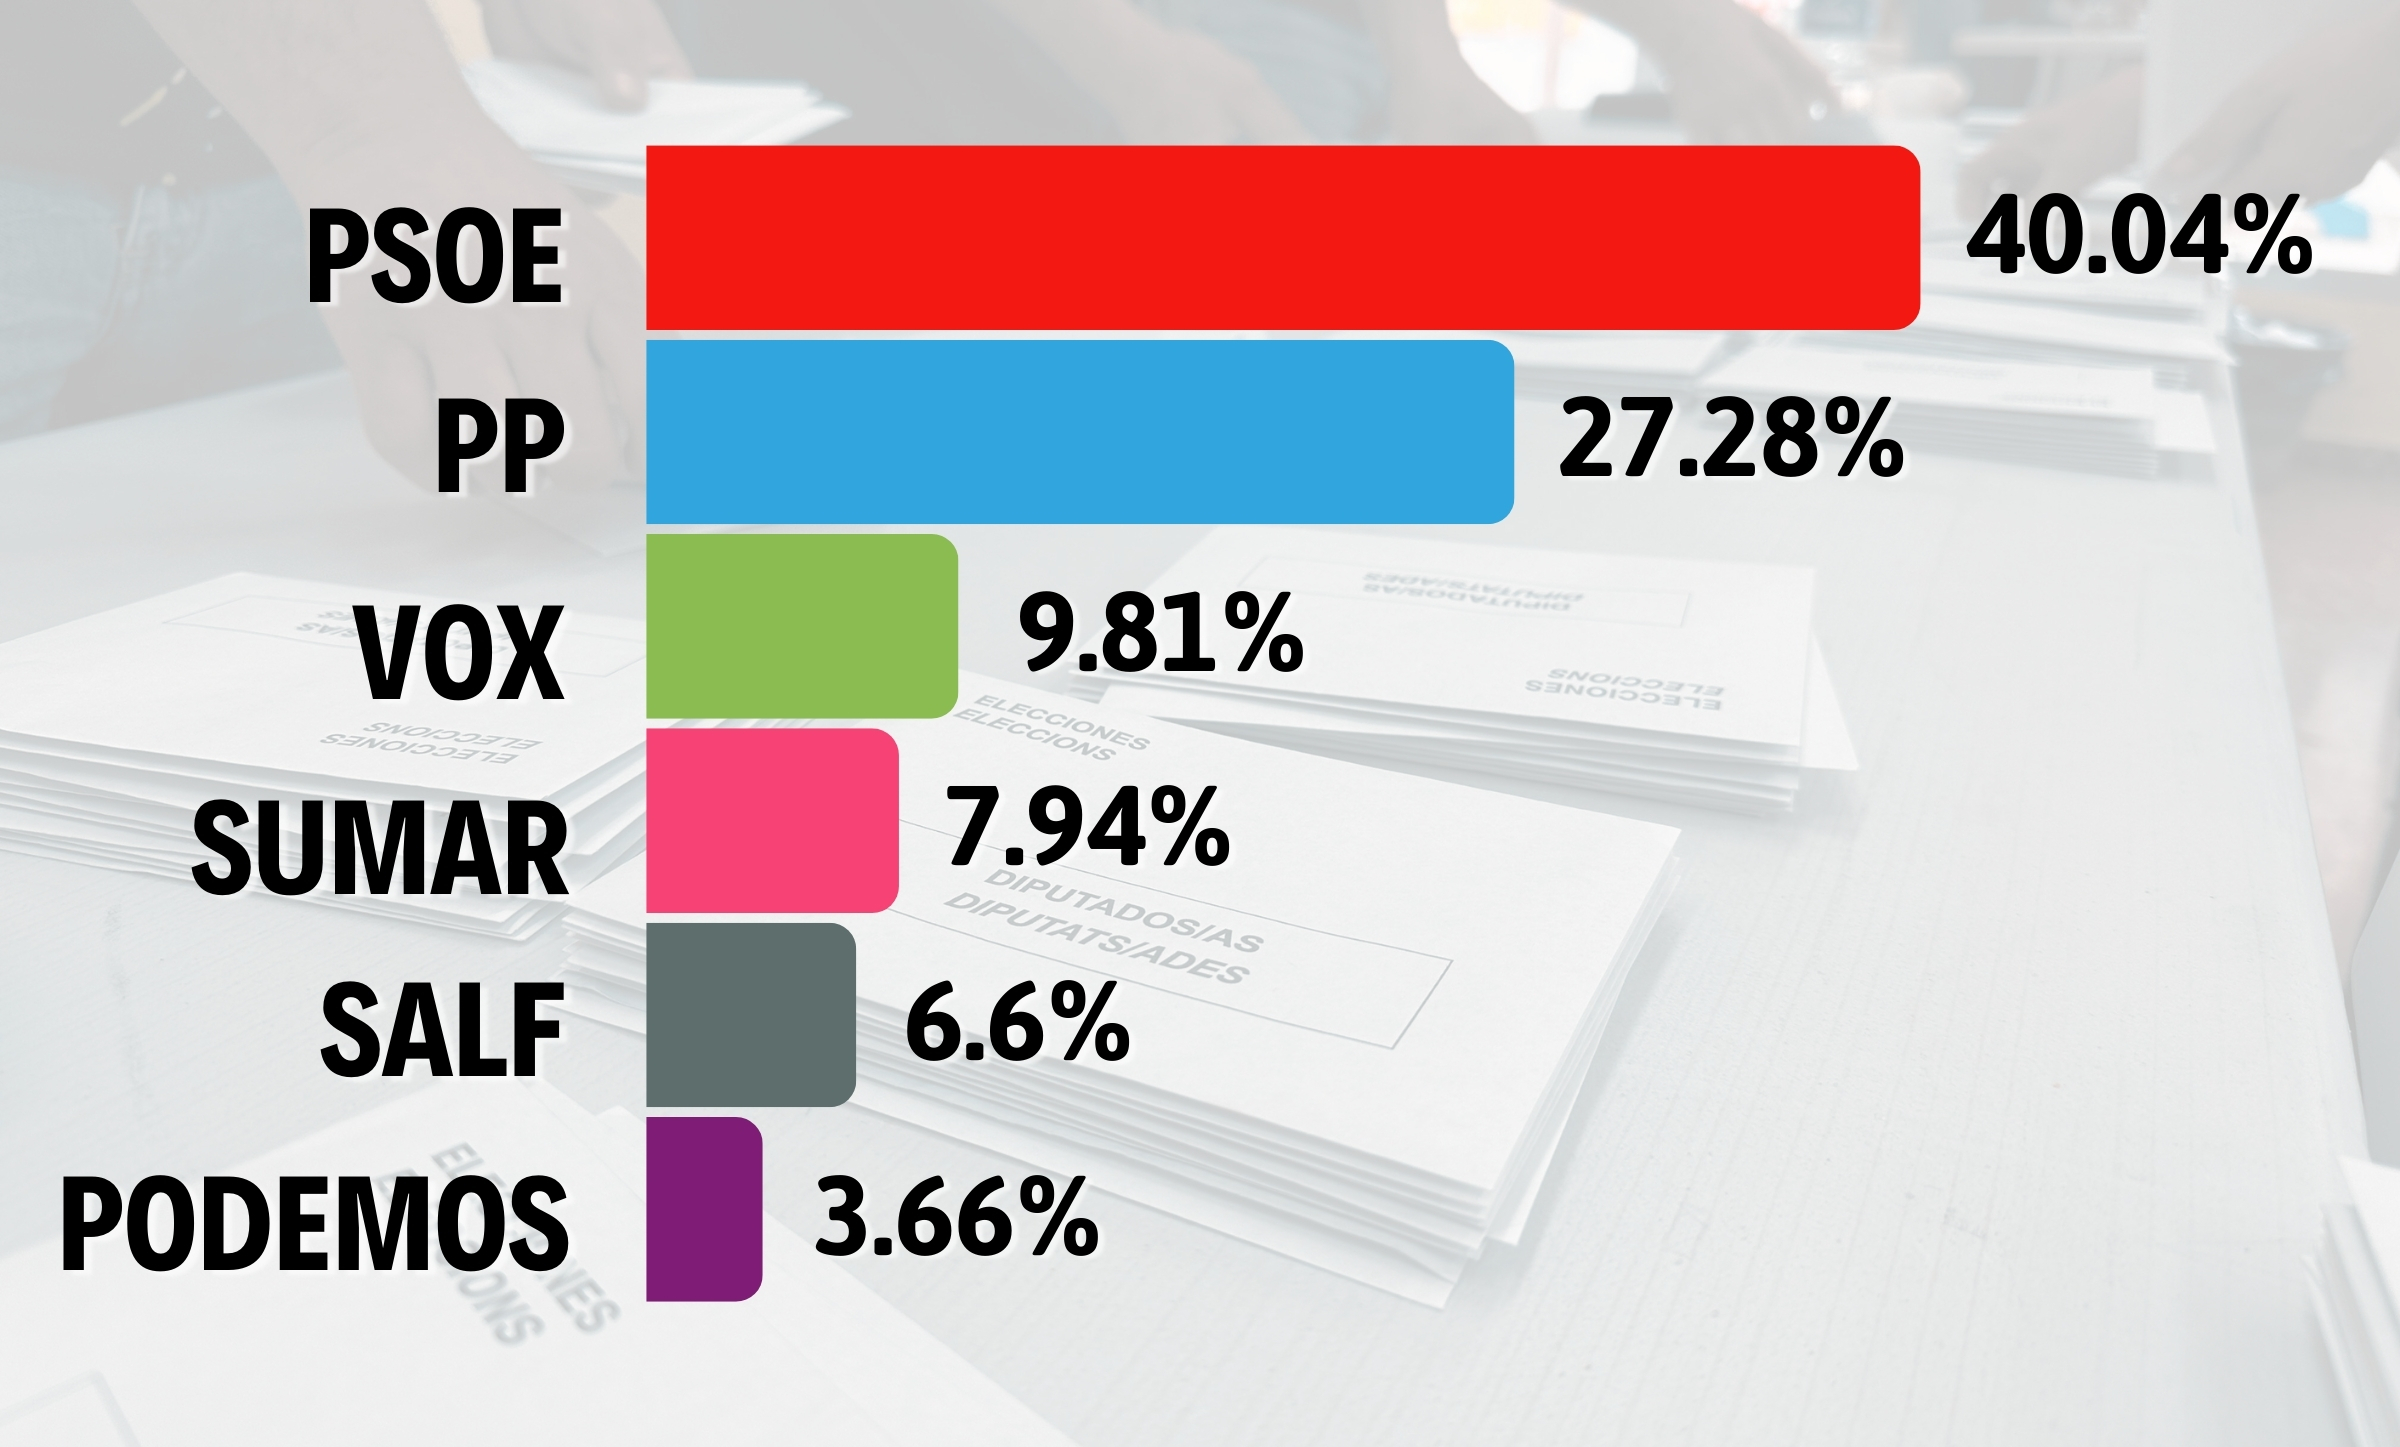 Quart de Poblet lidera la Comunitat con el mayor porcentaje de voto para el PSOE